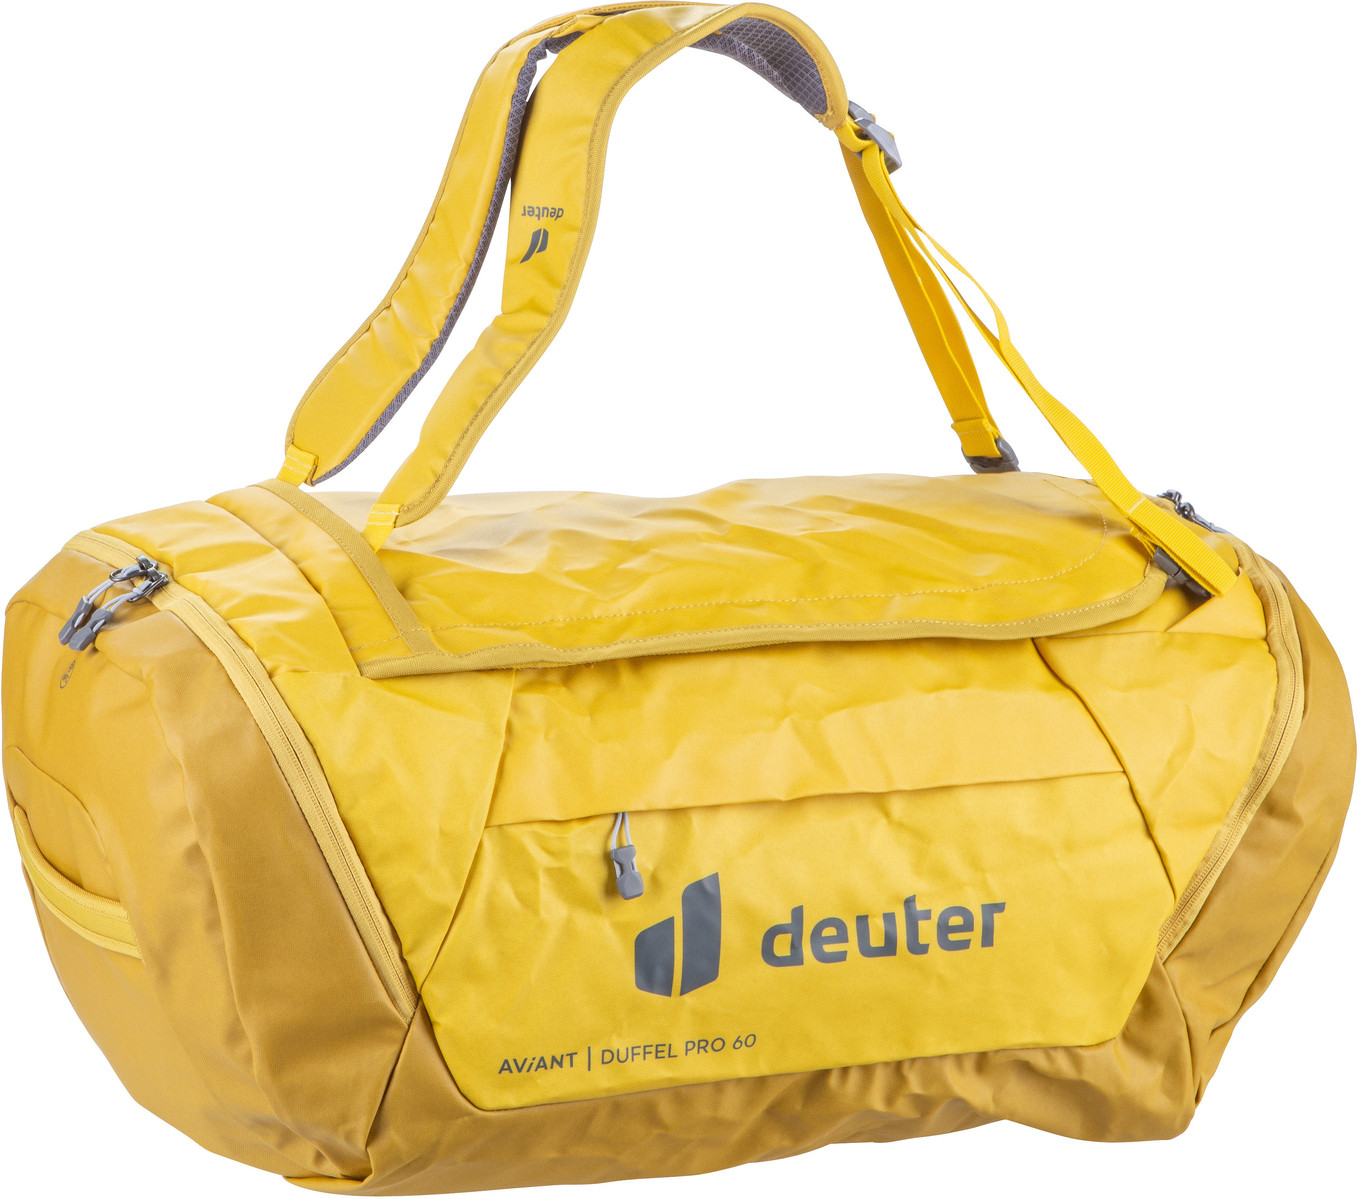 Deuter Aviant Duffel Pro 60  in Gelb (60 Liter), Reisetasche